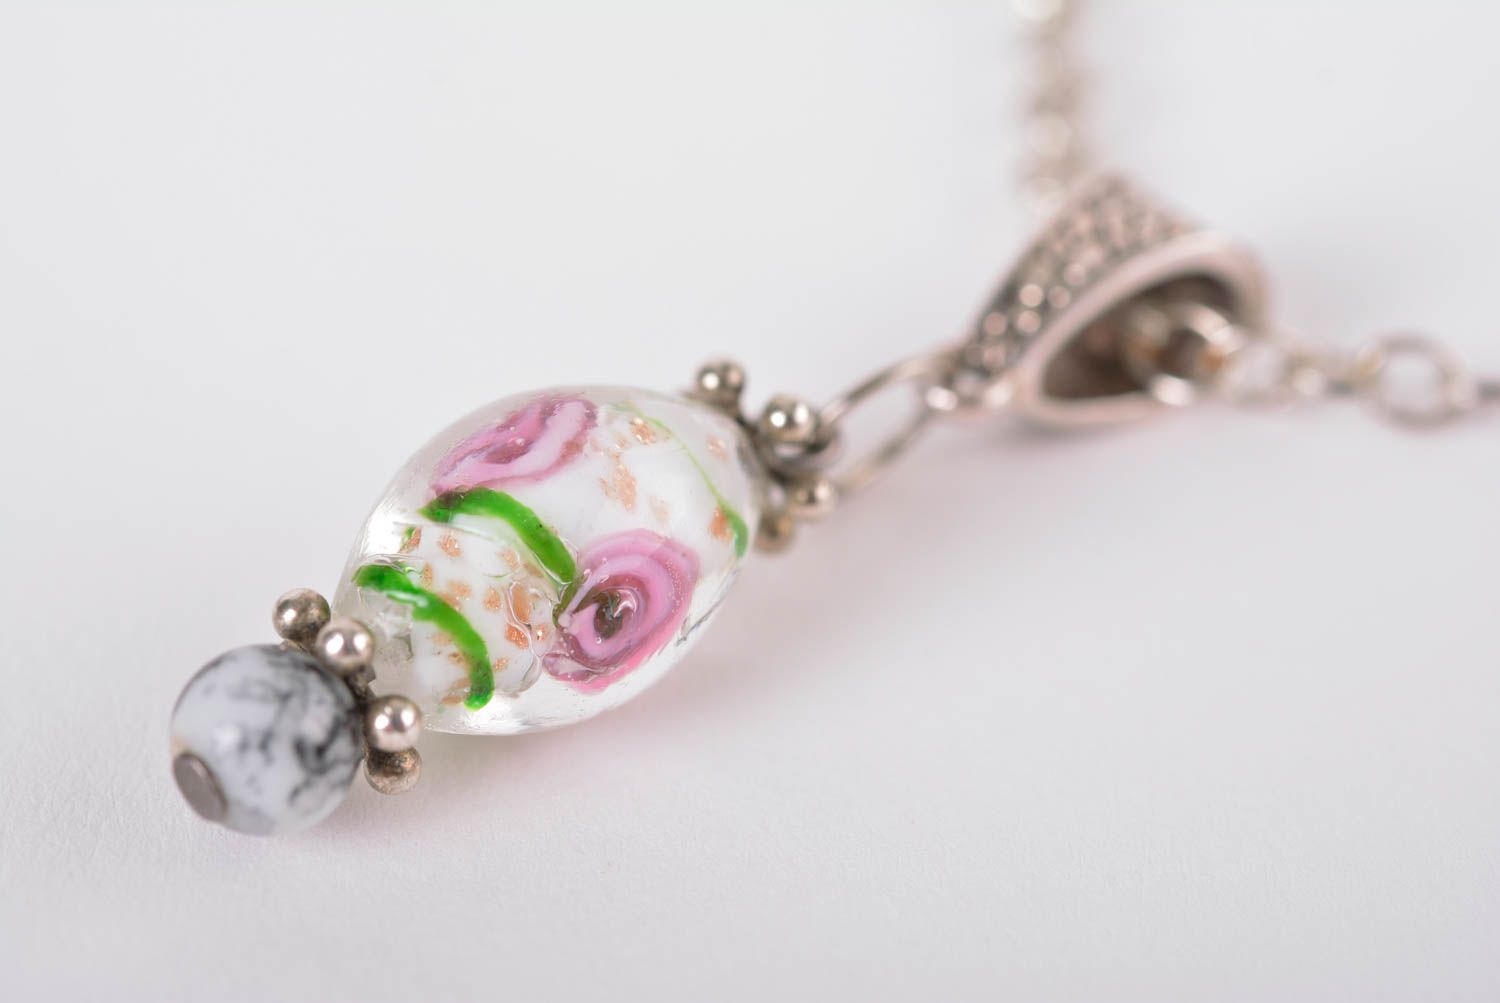 Handmade pendant glass pendant unusual jewelry designer accessory gift ideas photo 3